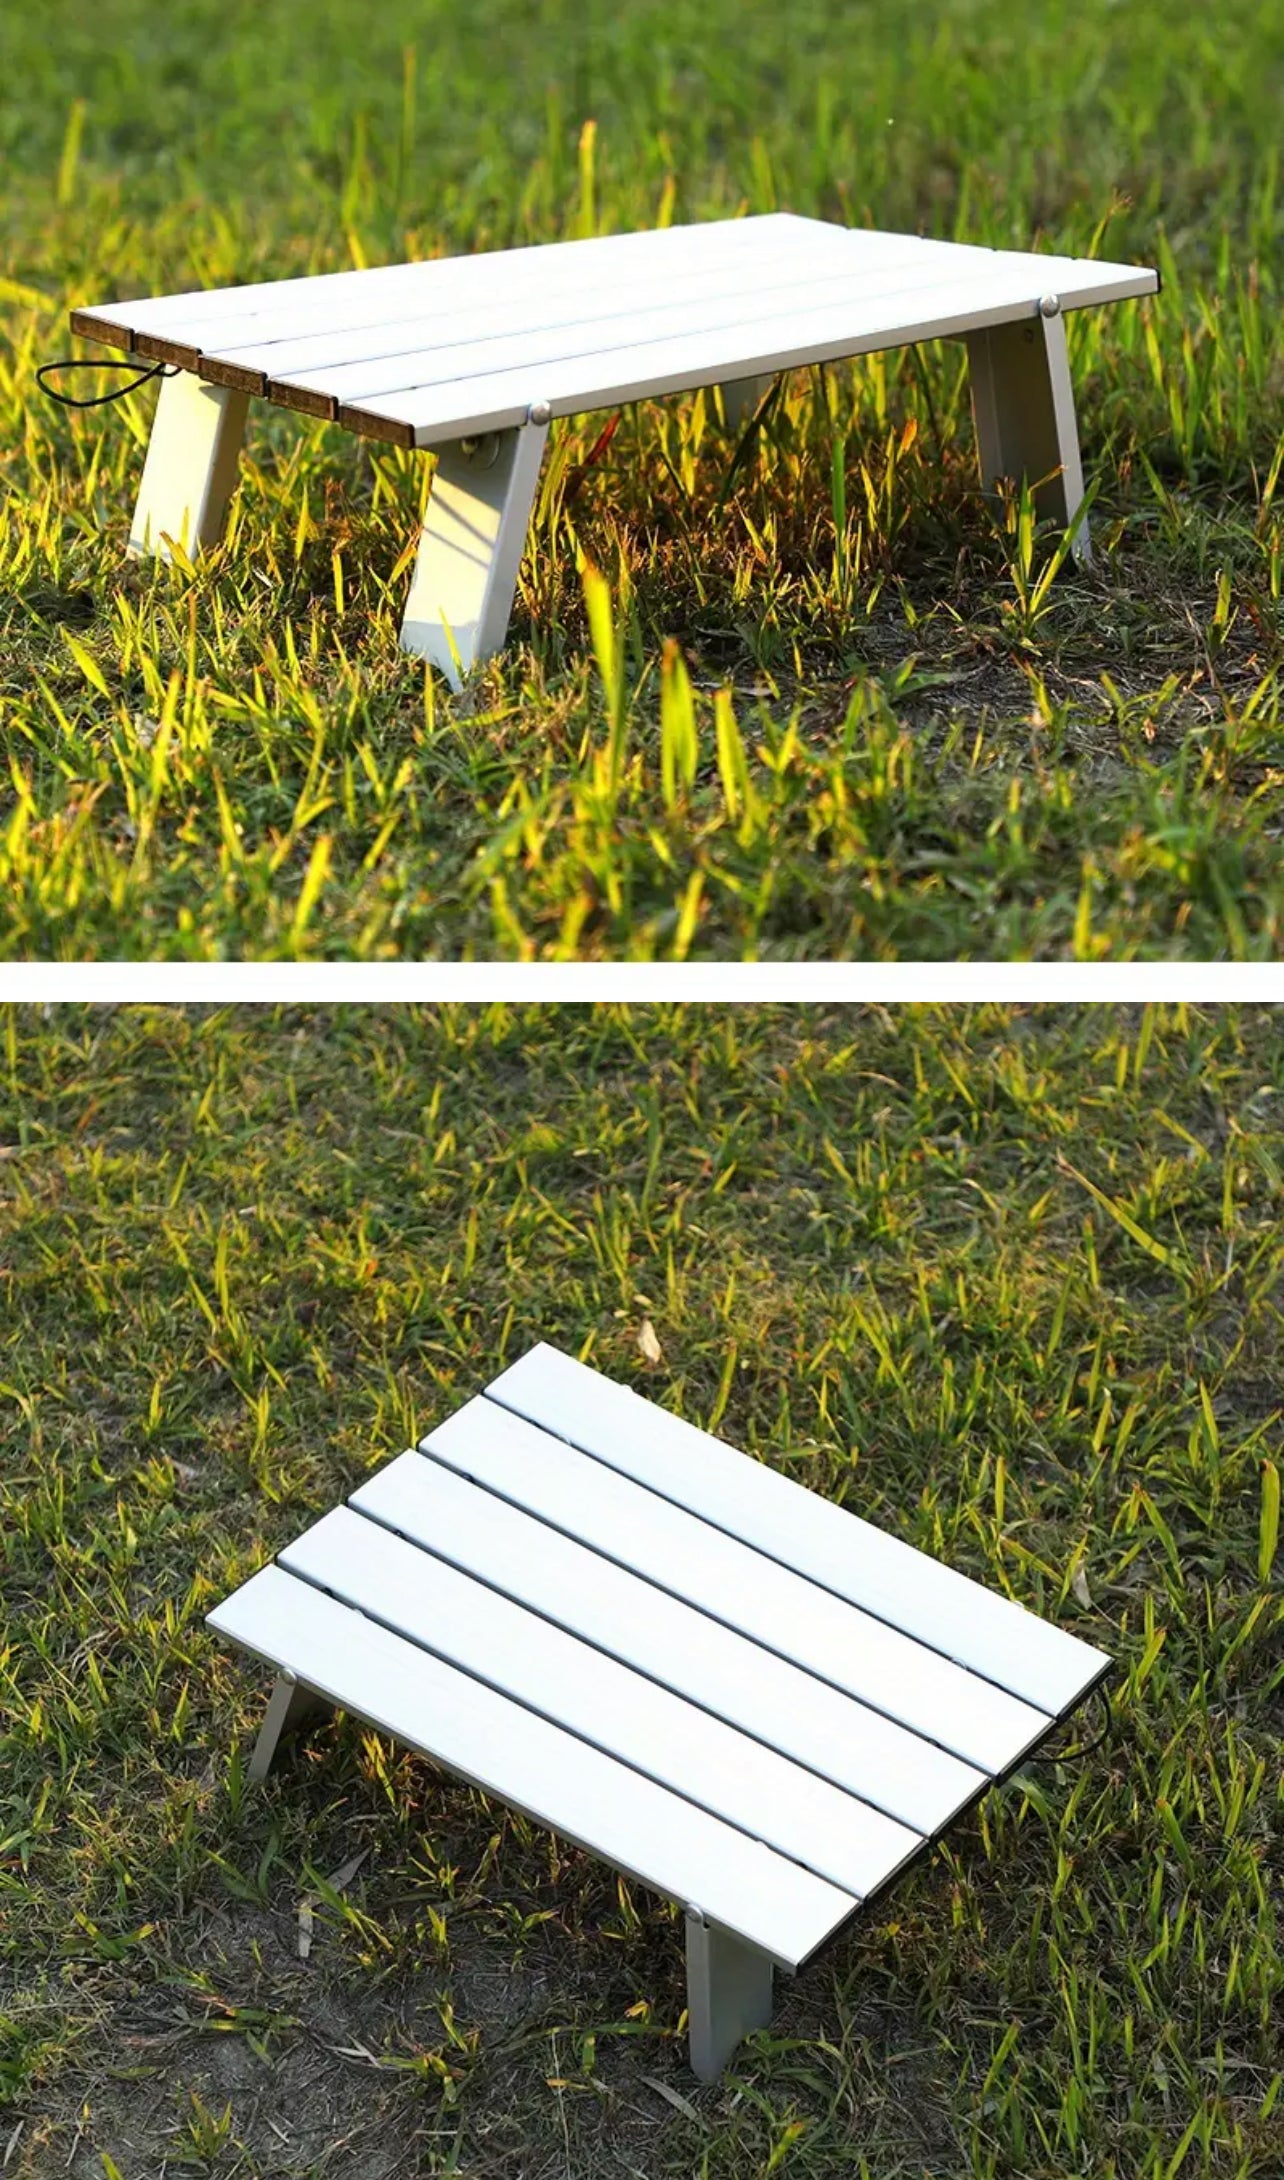 16in Aluminum Alloy Portable Mini Outdoor Table